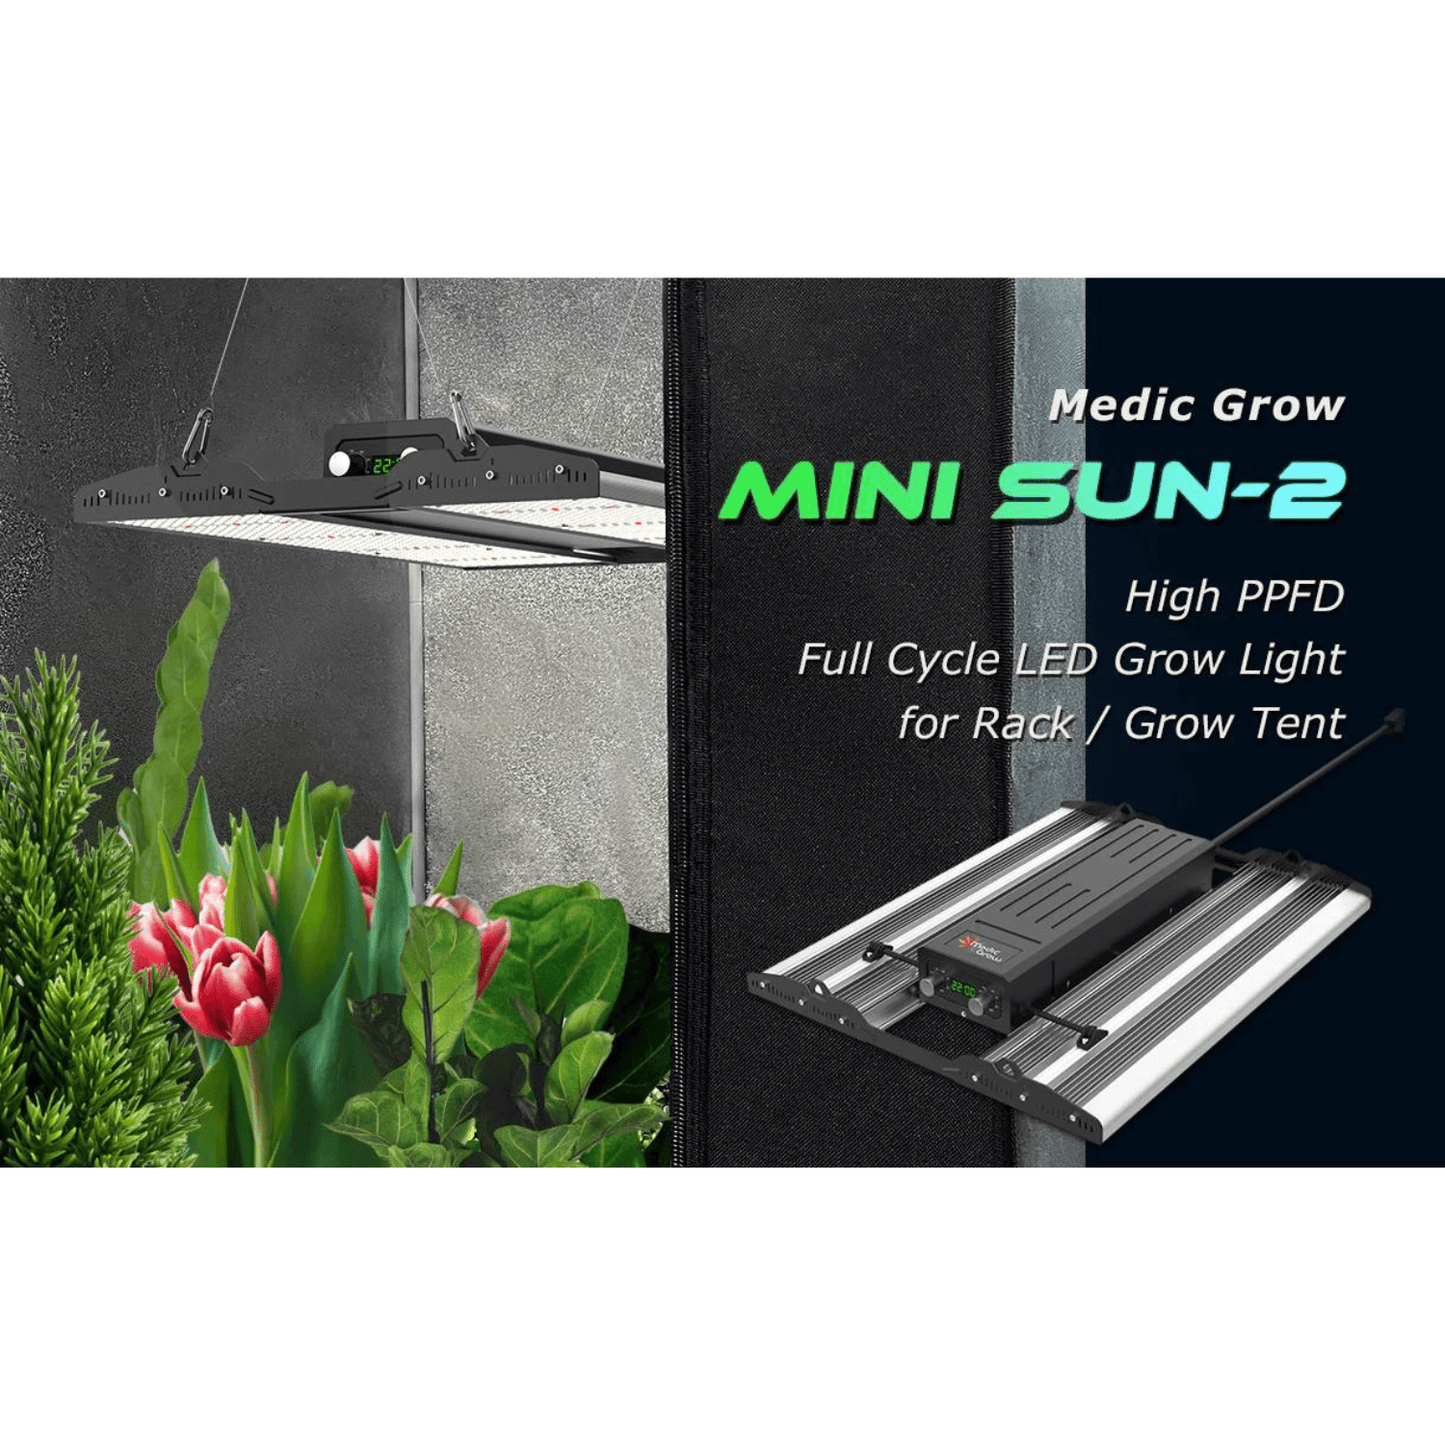 Medic Grow MINI SUN-2 240W Full Cycle LED Grow Light Mini Sun-2 240W Grow Lights